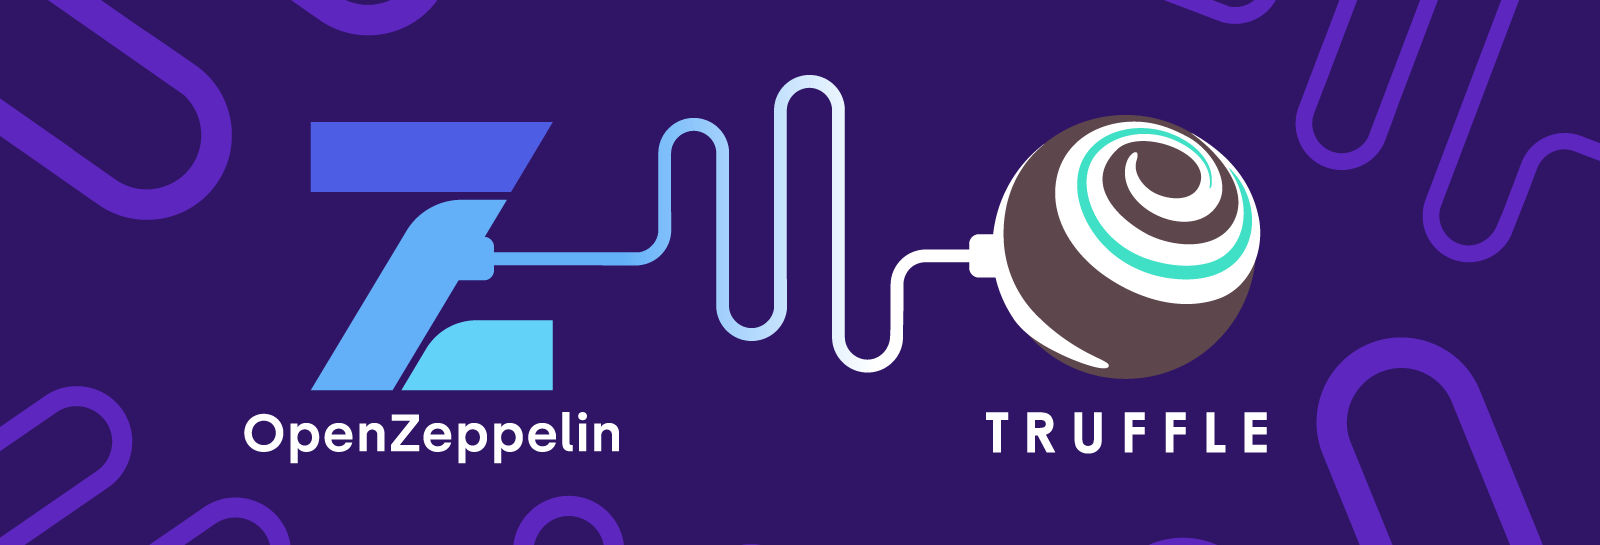 Truffle + OpenZeppelin Banner